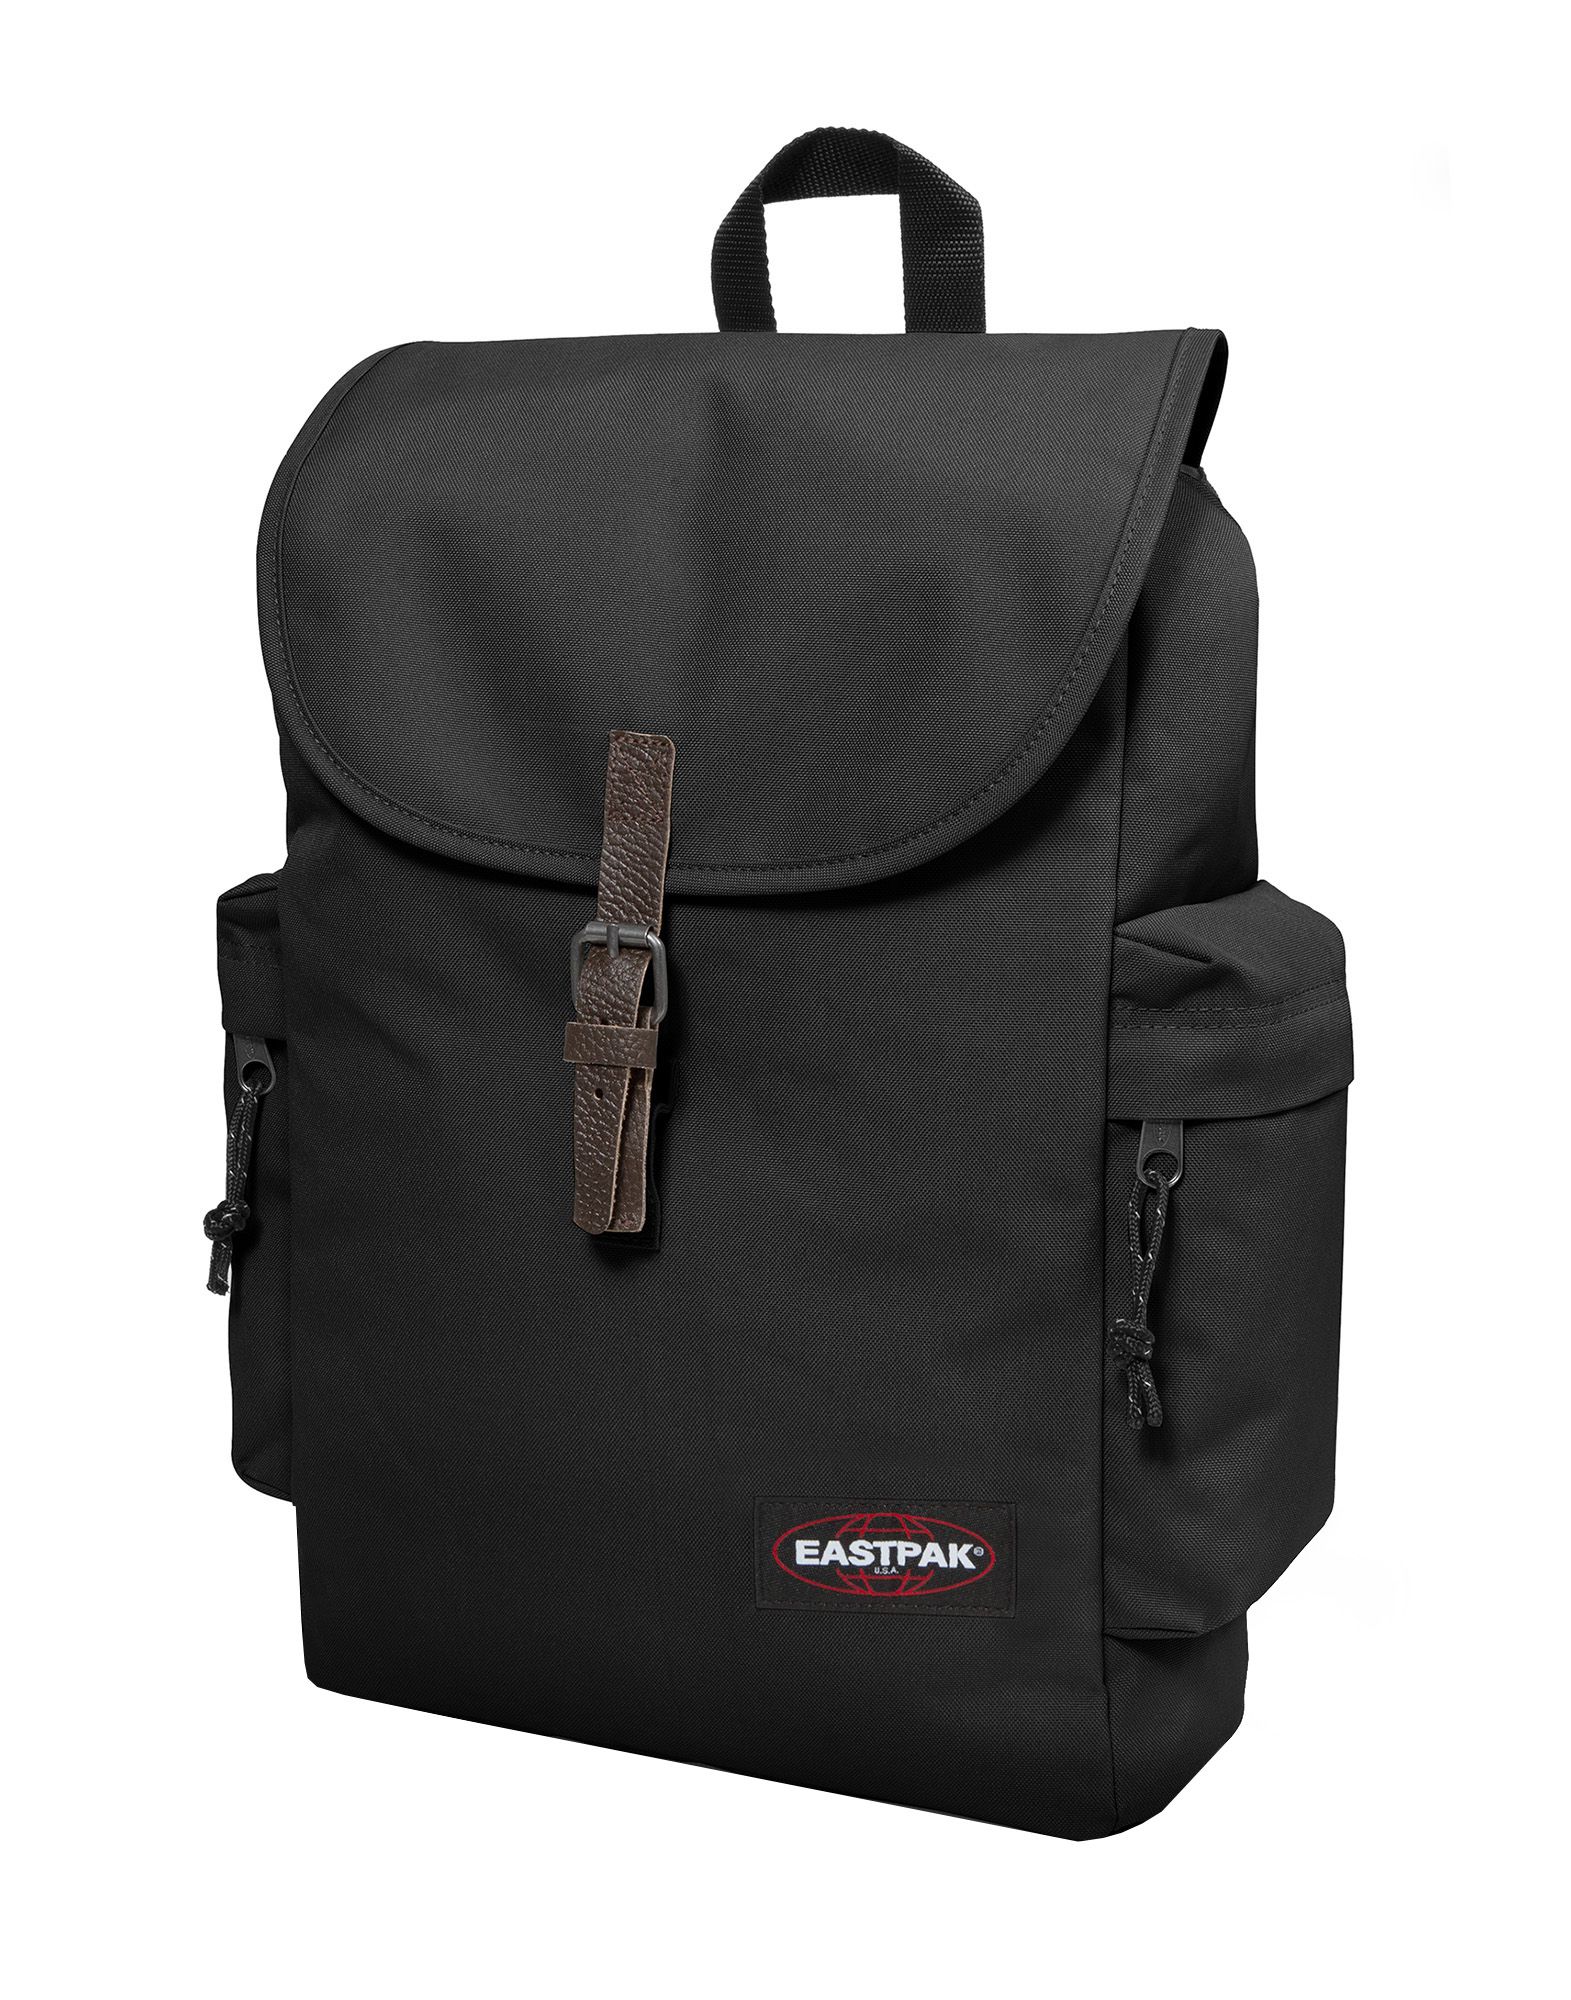 EASTPAK Backpack & fanny pack,45356129IW 1